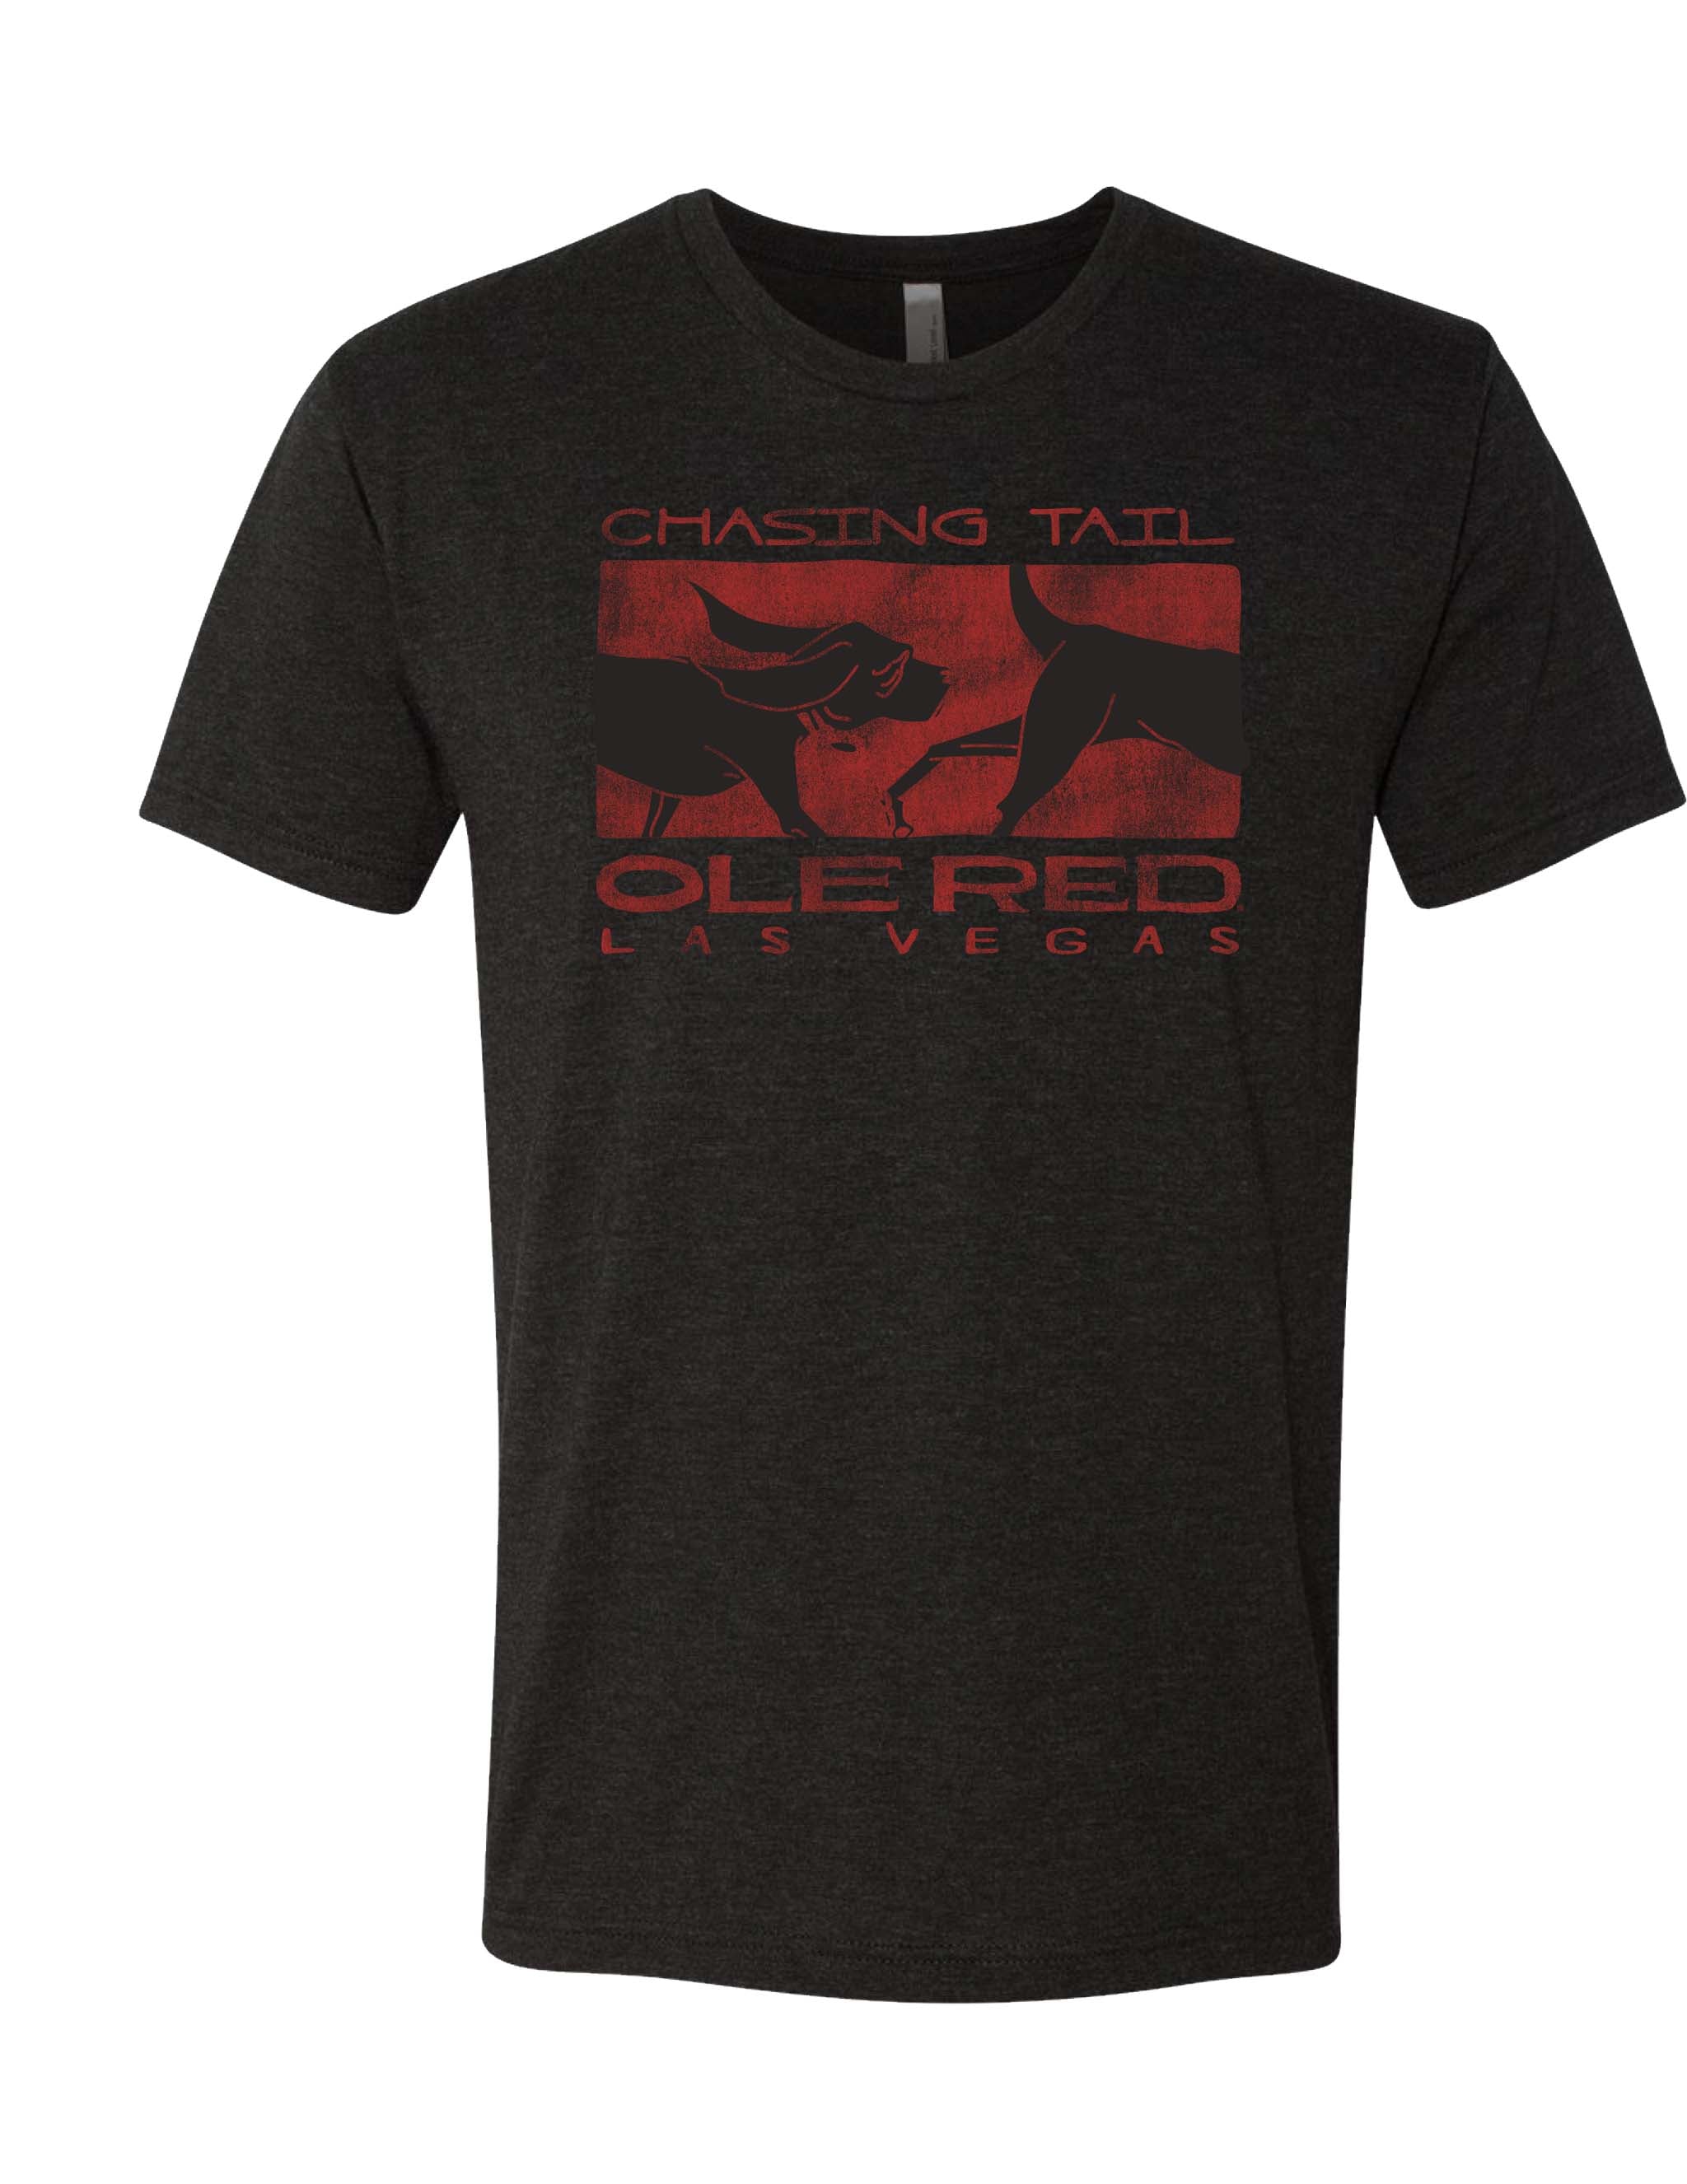 Ole Red Vegas Chasing Tail T-Shirt